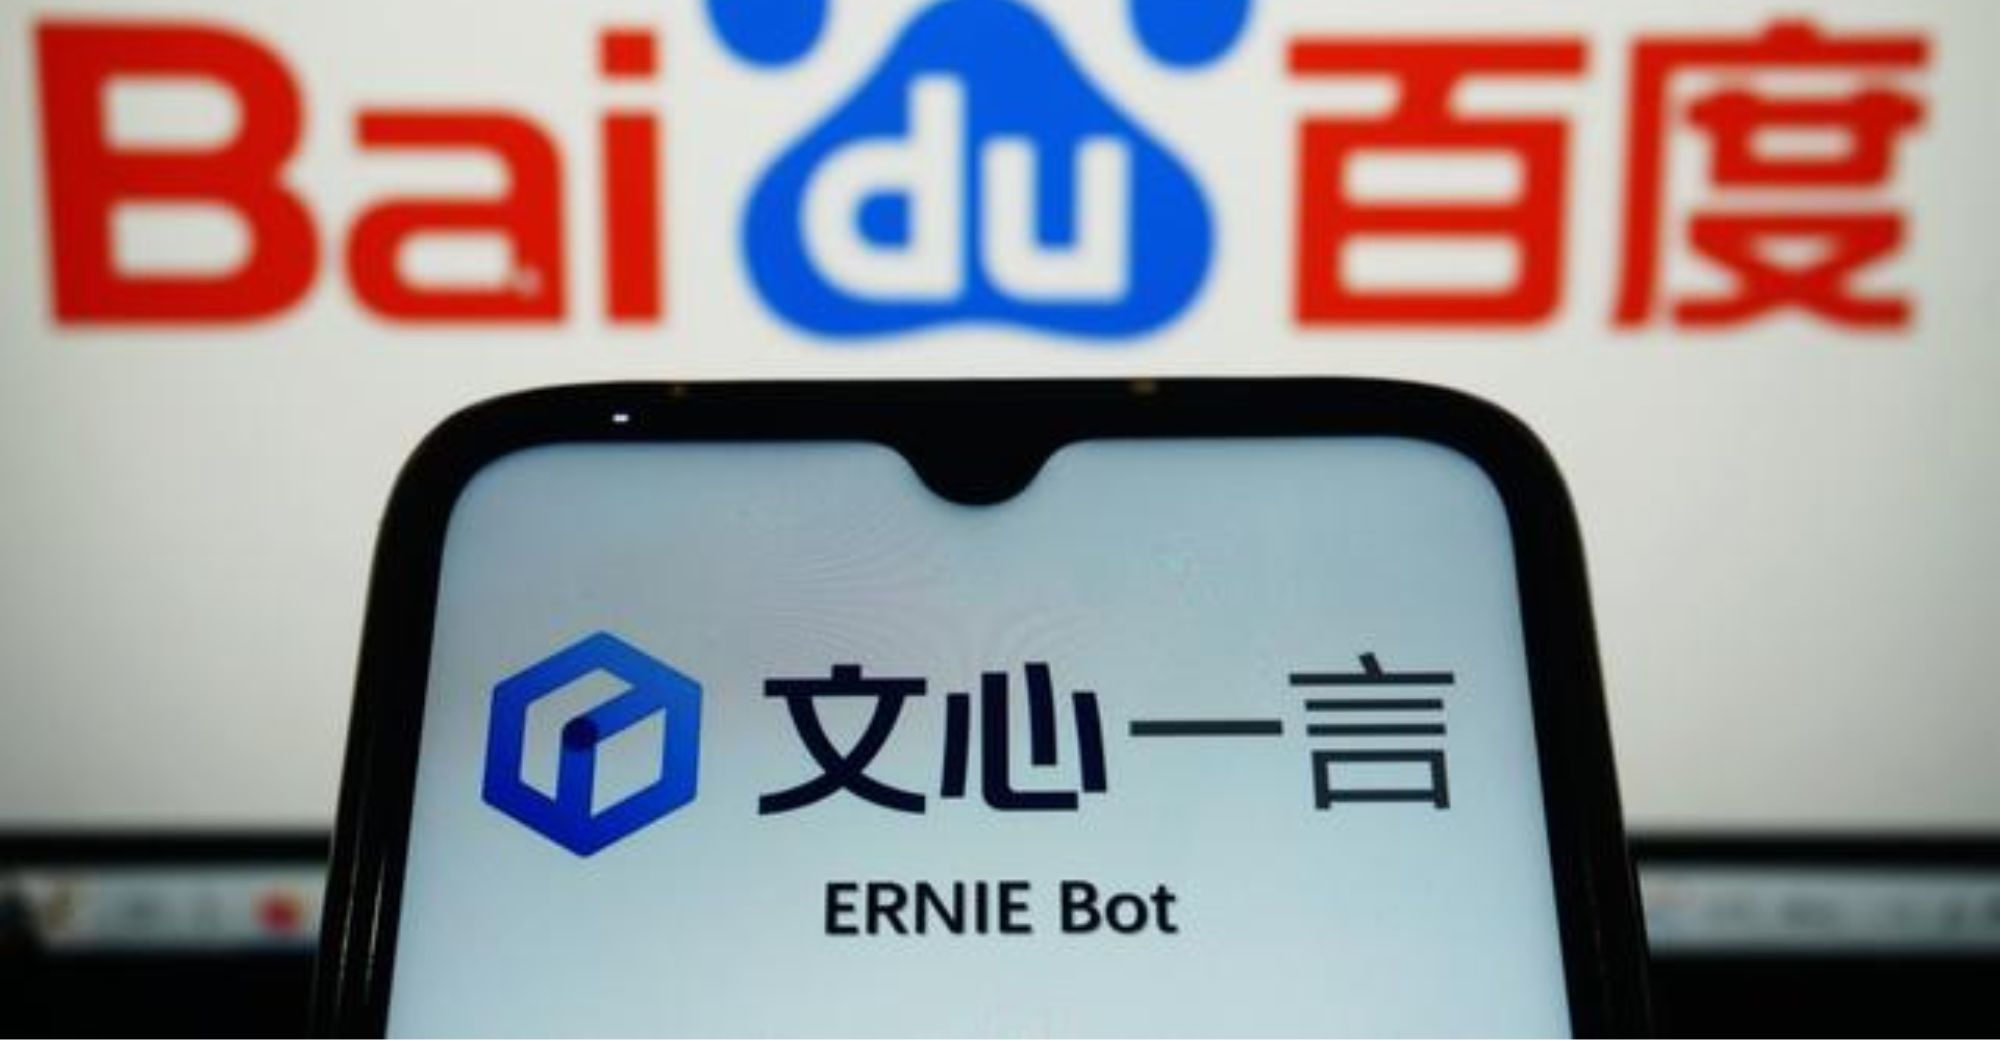 Baidu’s Ernie Bot Surpasses 100 Million User Milestone